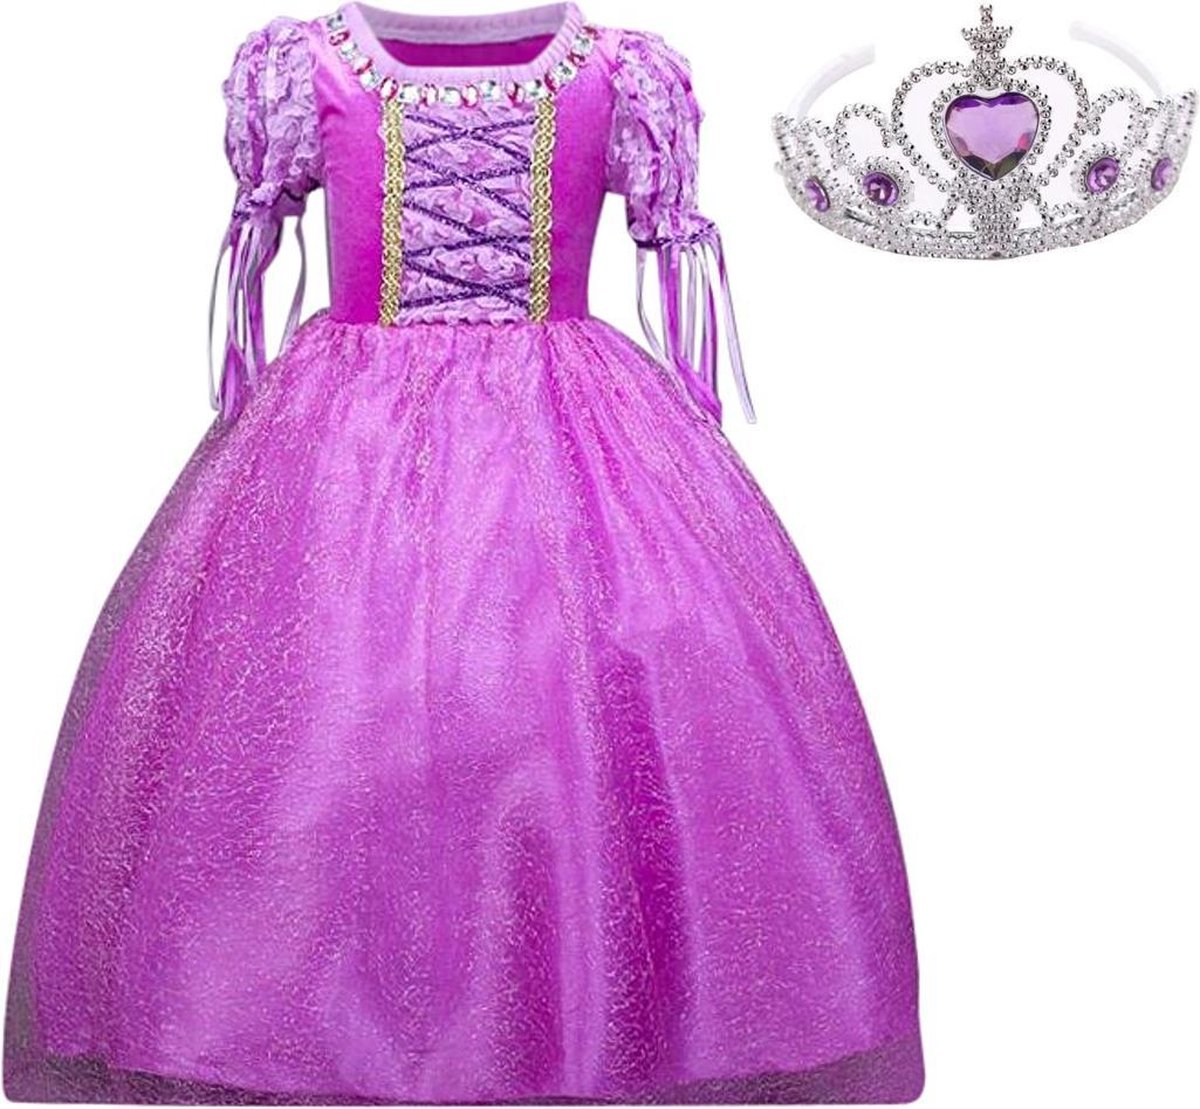 Rapunzel jurk Prinsessen jurk verkleedjurk Deluxe 104 -110 (110) paars + kroon verkleedkleding